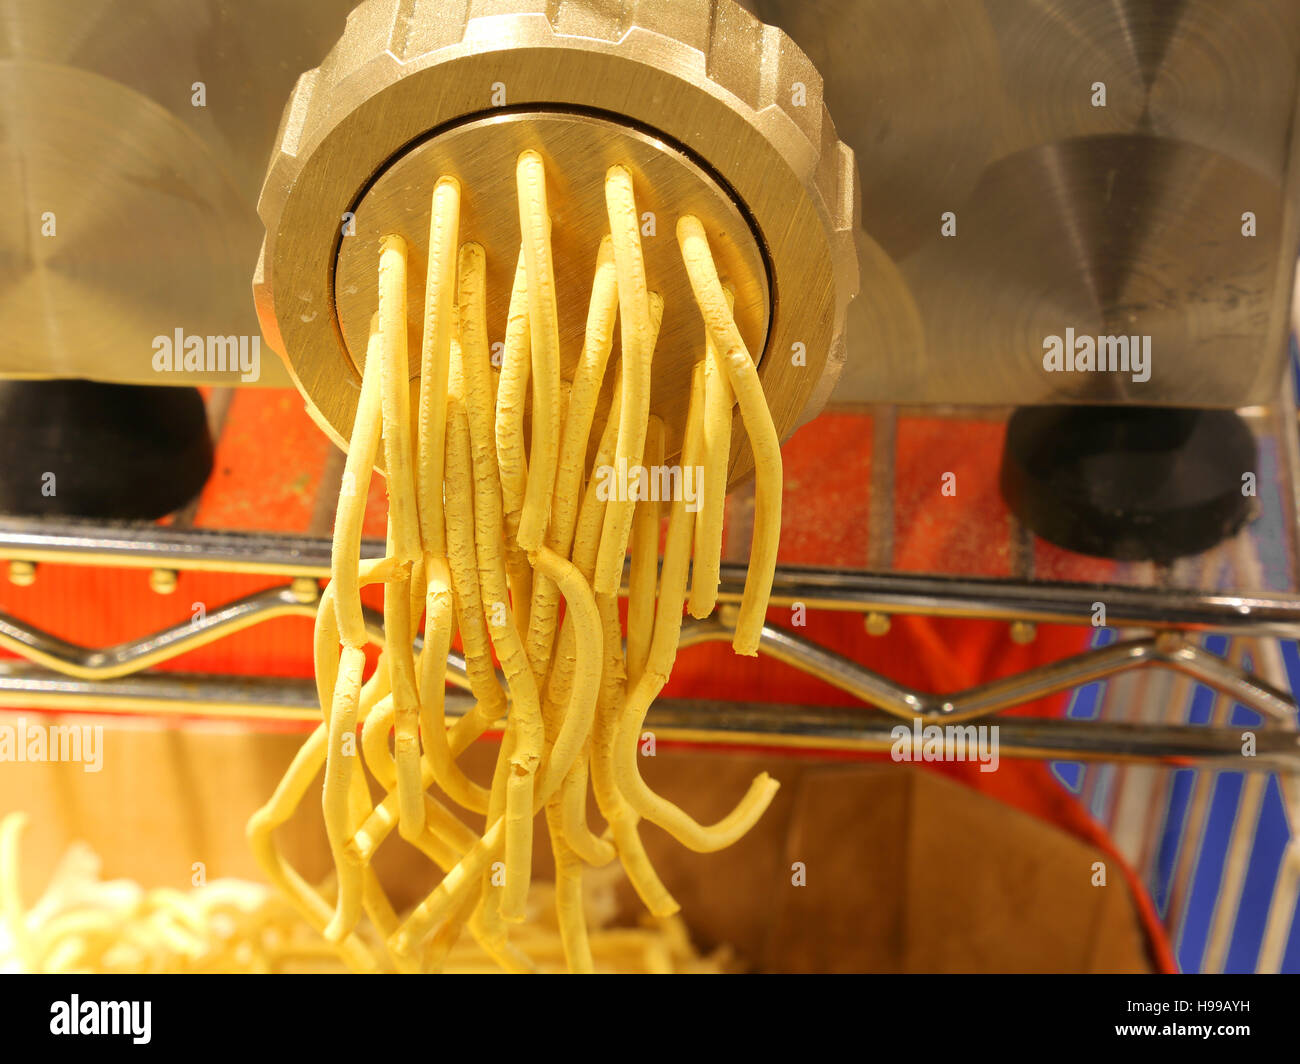 https://c8.alamy.com/comp/H99AYH/machine-to-make-fresh-homemade-italian-spaghetti-with-water-and-flour-H99AYH.jpg